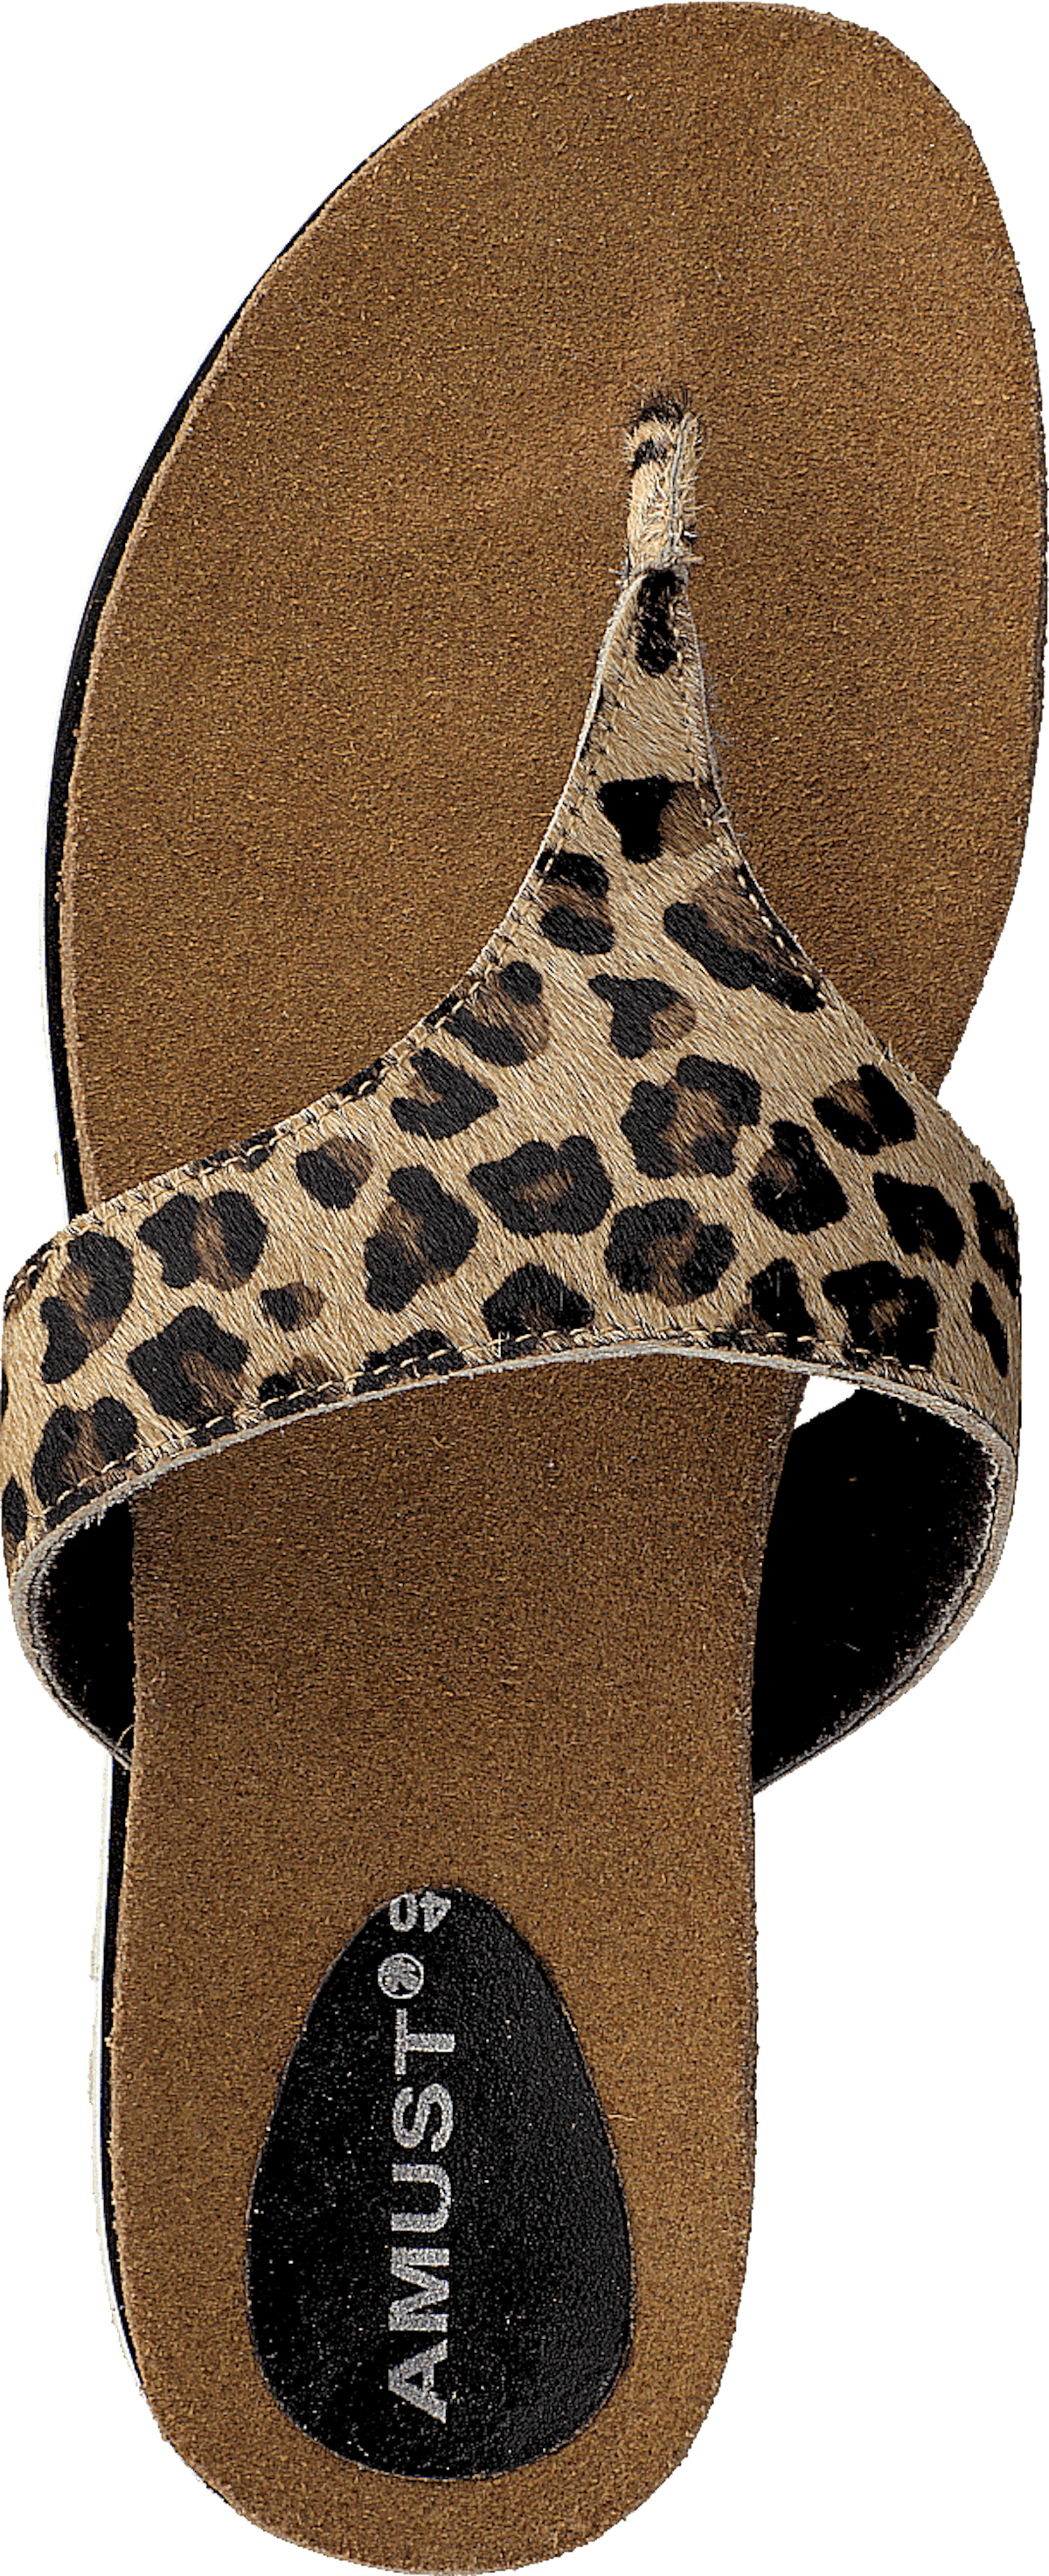 Animal sandal Leopard